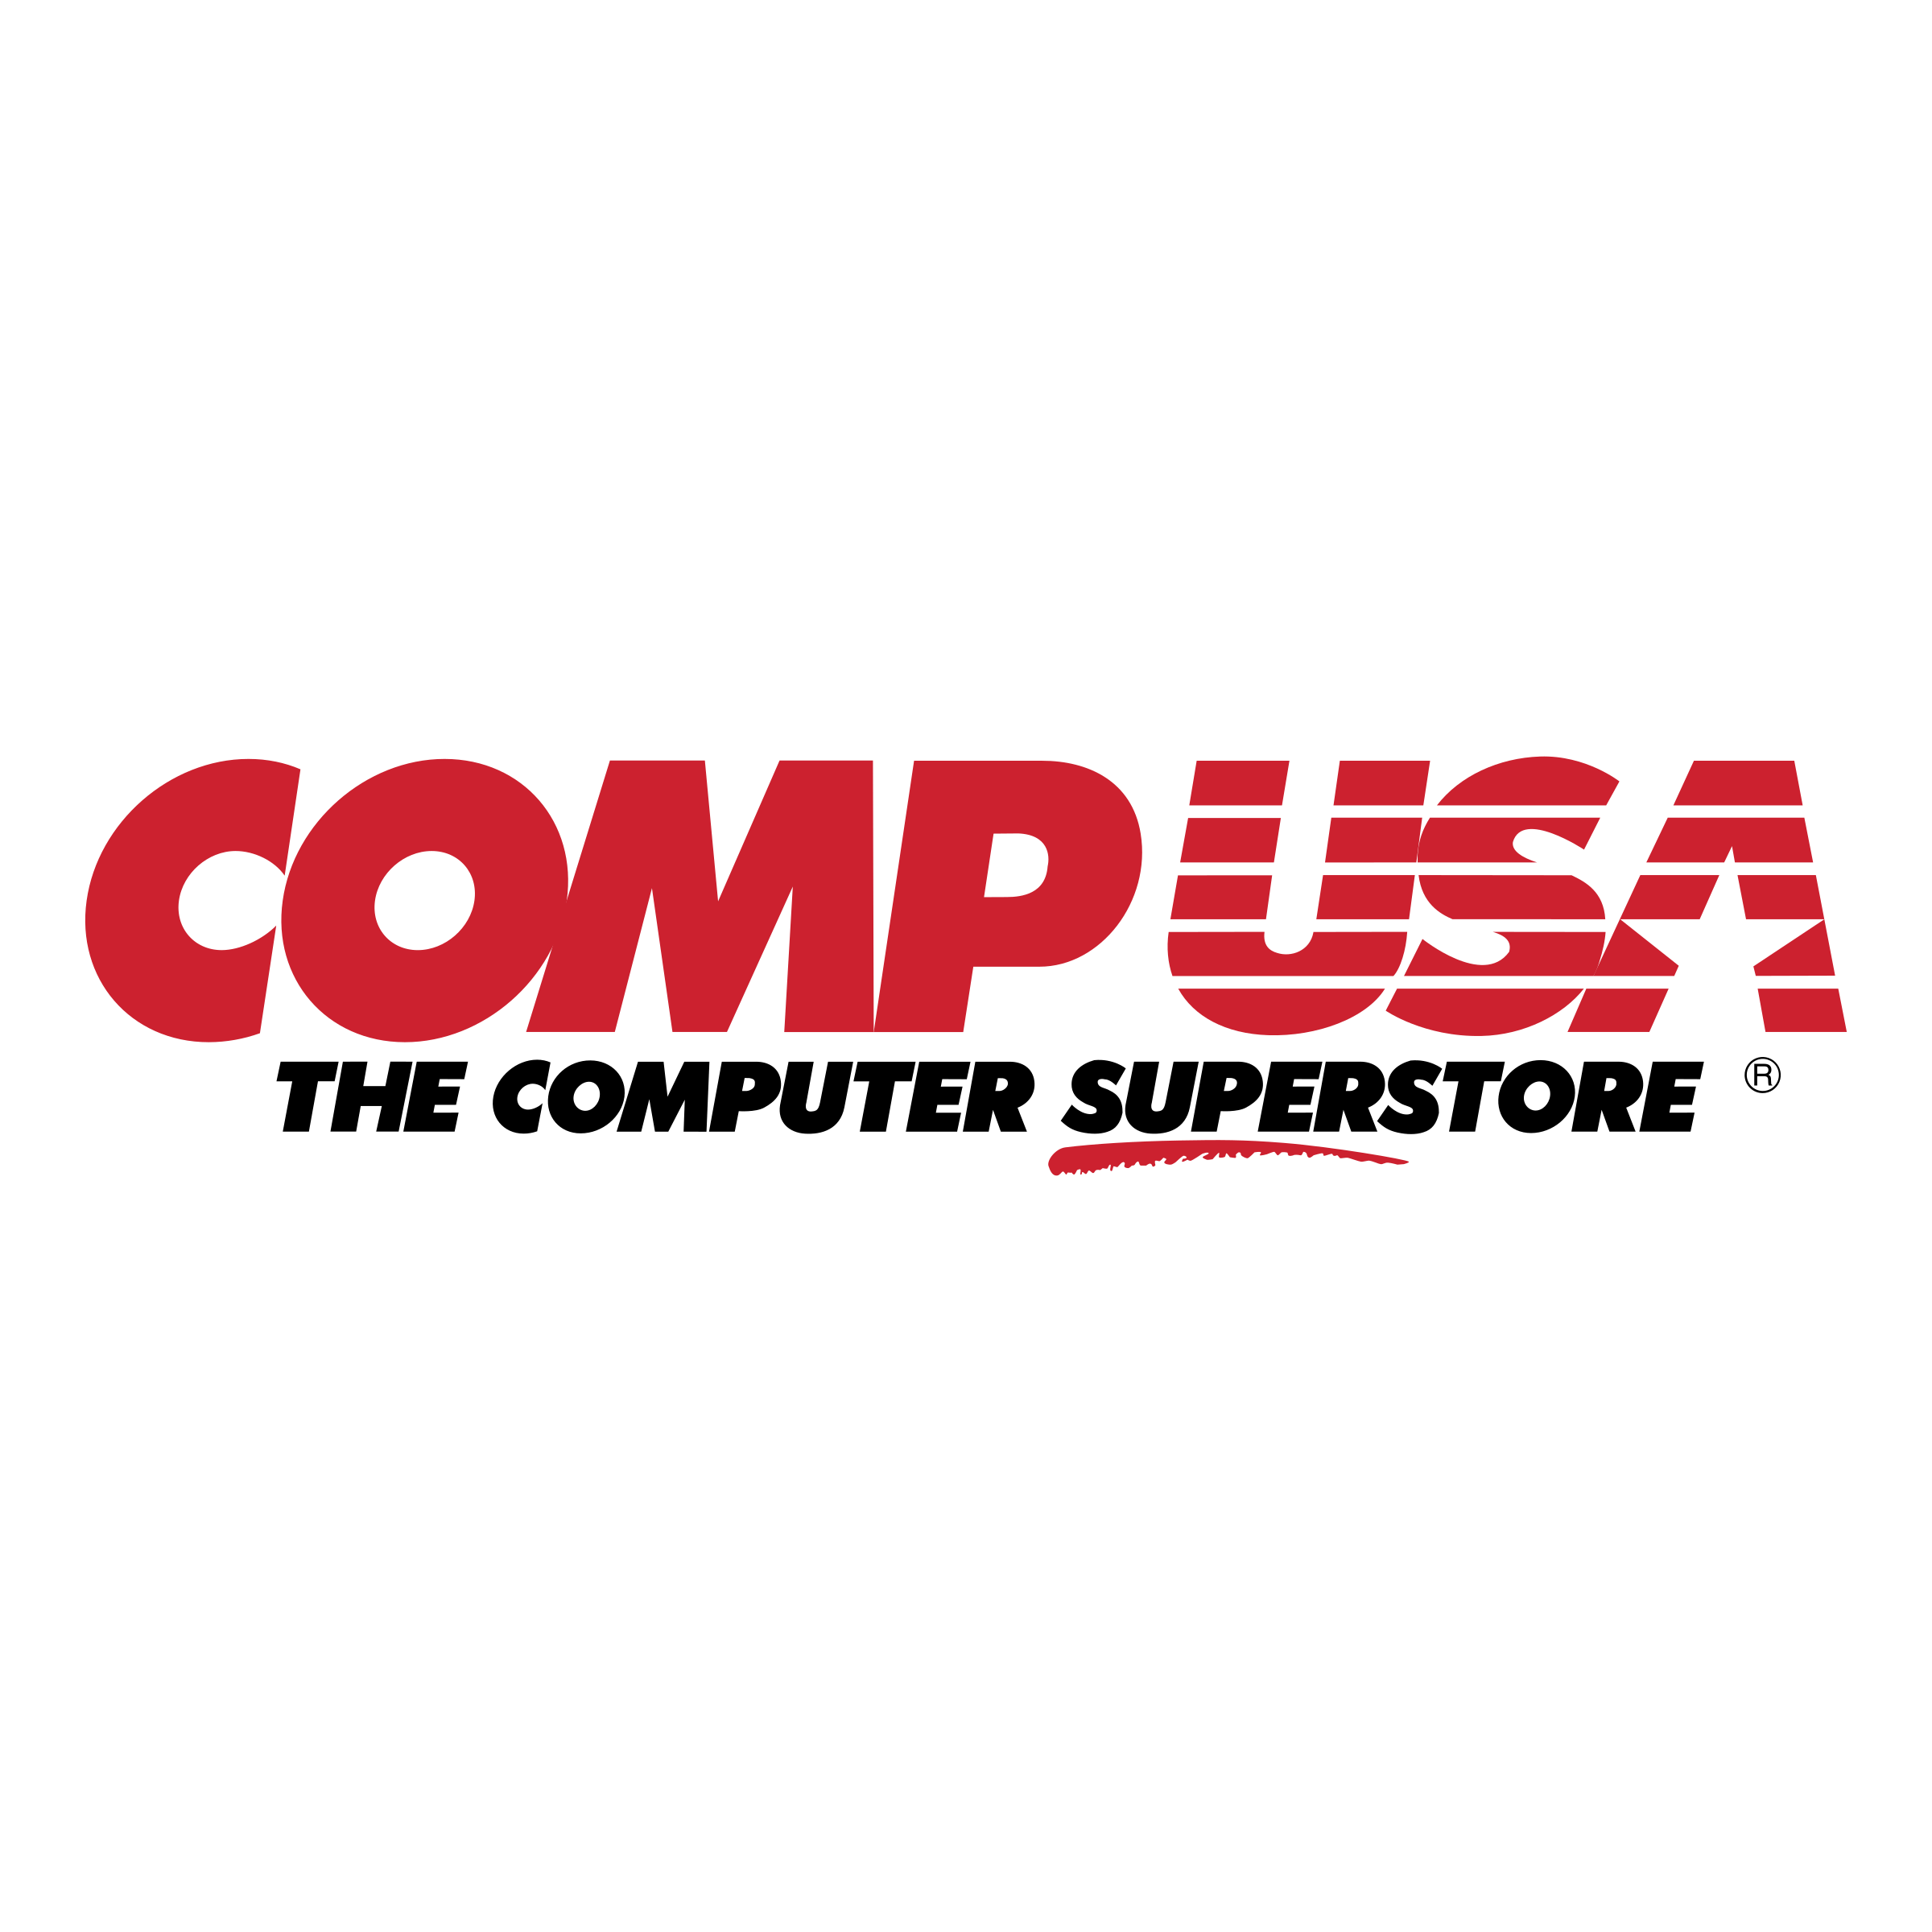 CompUSA Logo - CompUSA Logo PNG Transparent & SVG Vector - Freebie Supply